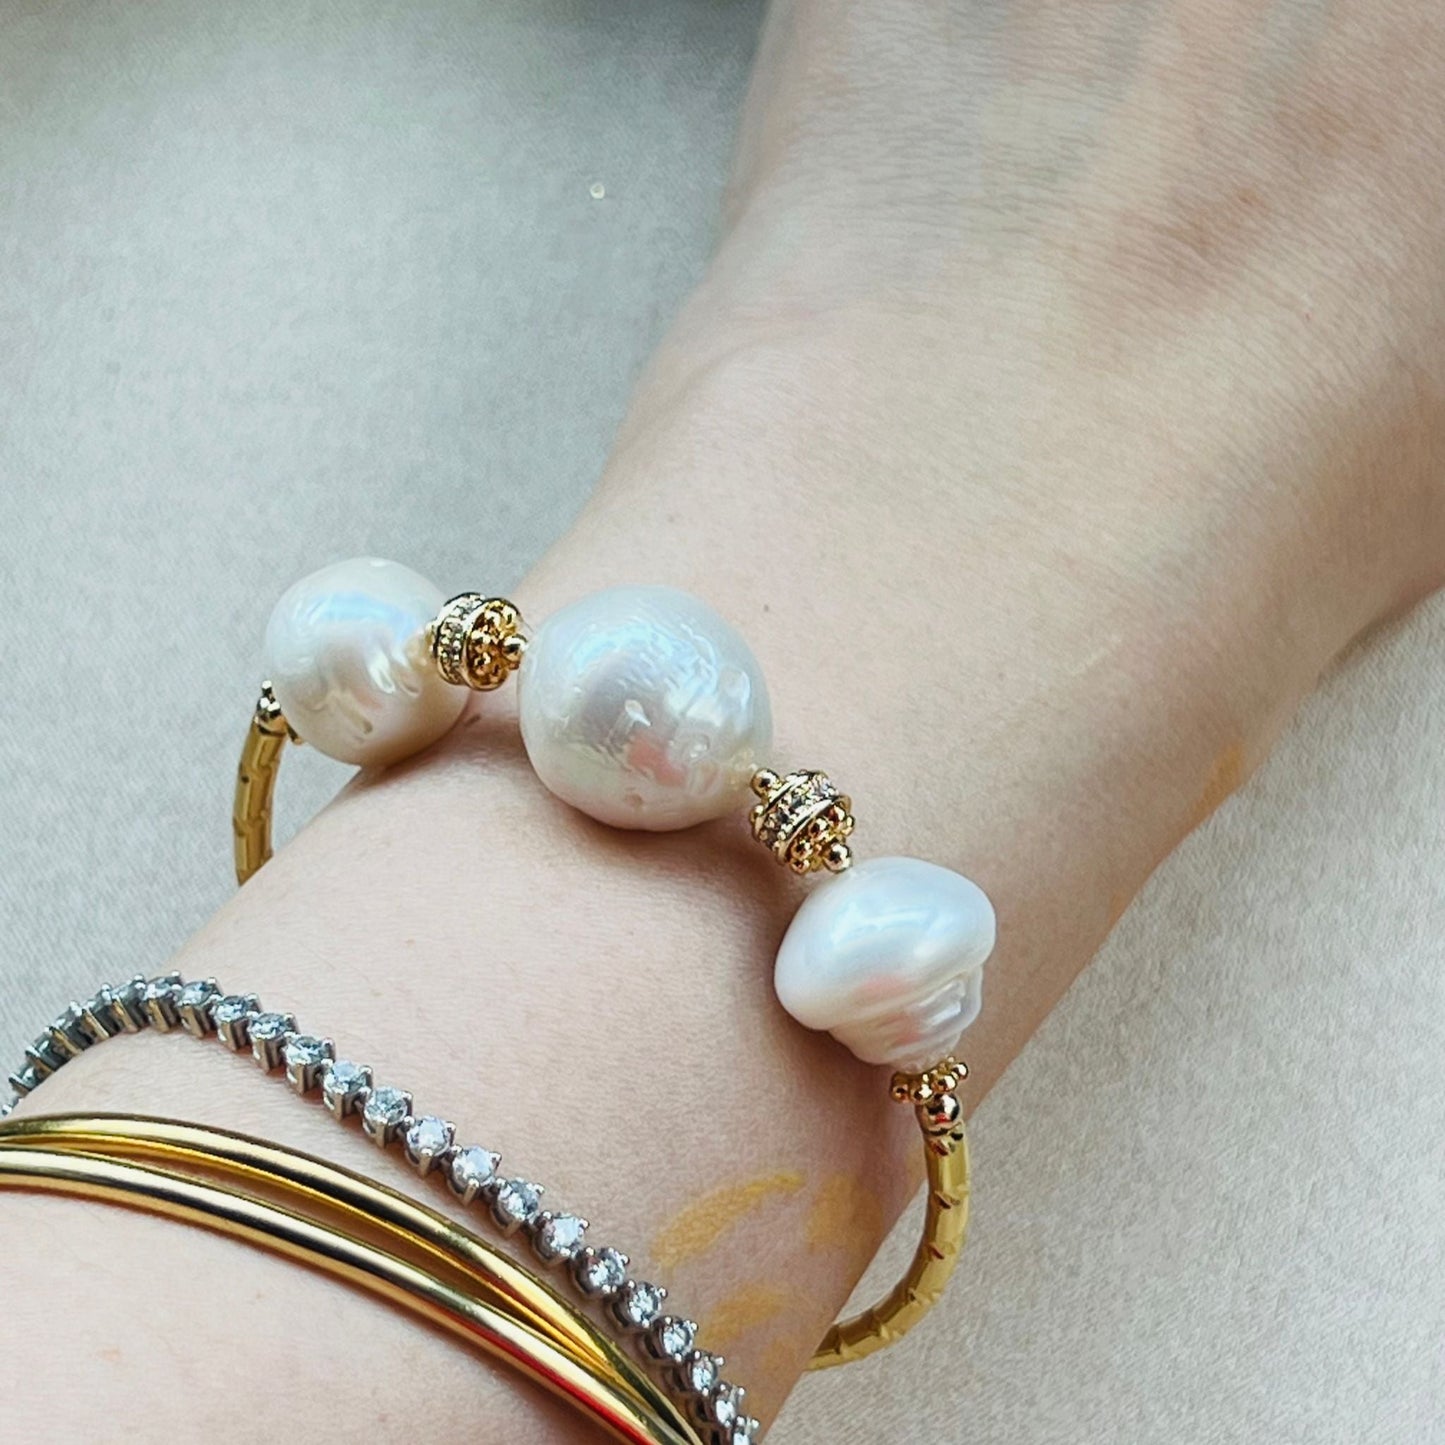 Precious Pearl Diadem Bracelet